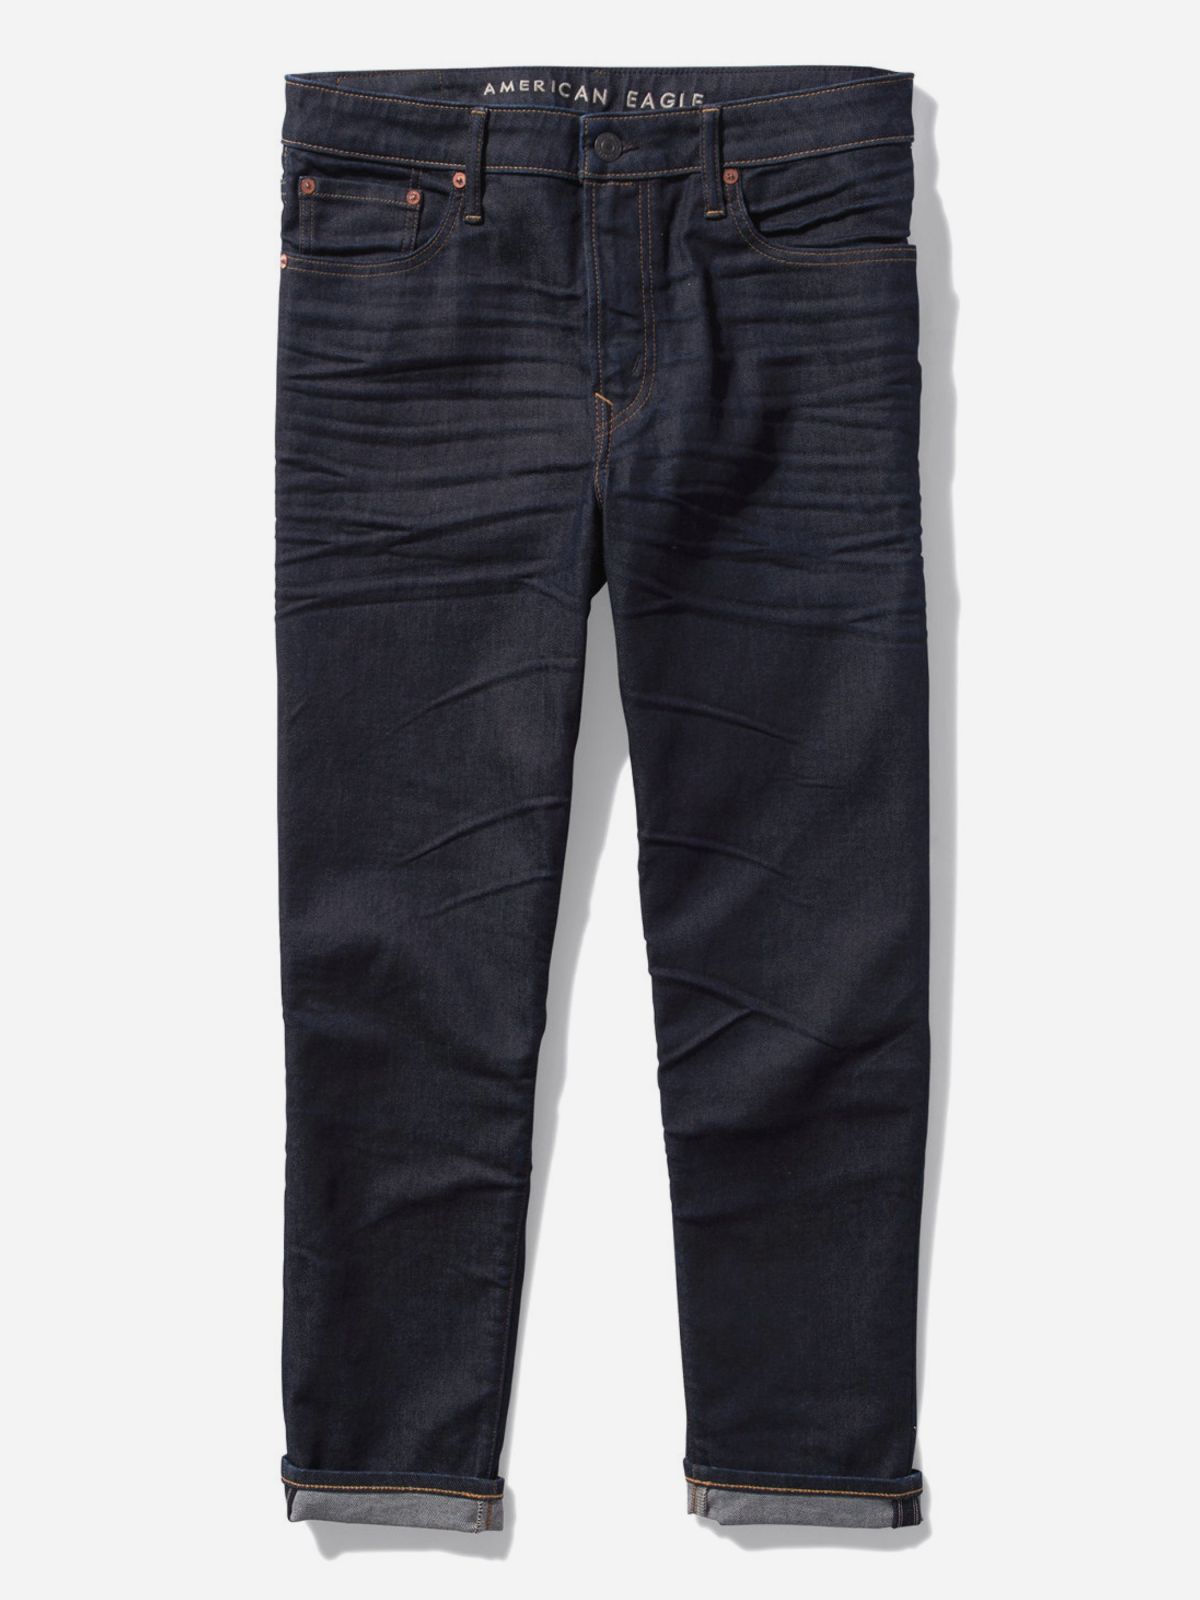  מכנסי ג'ינס LOOSE CROPPED של AMERICAN EAGLE